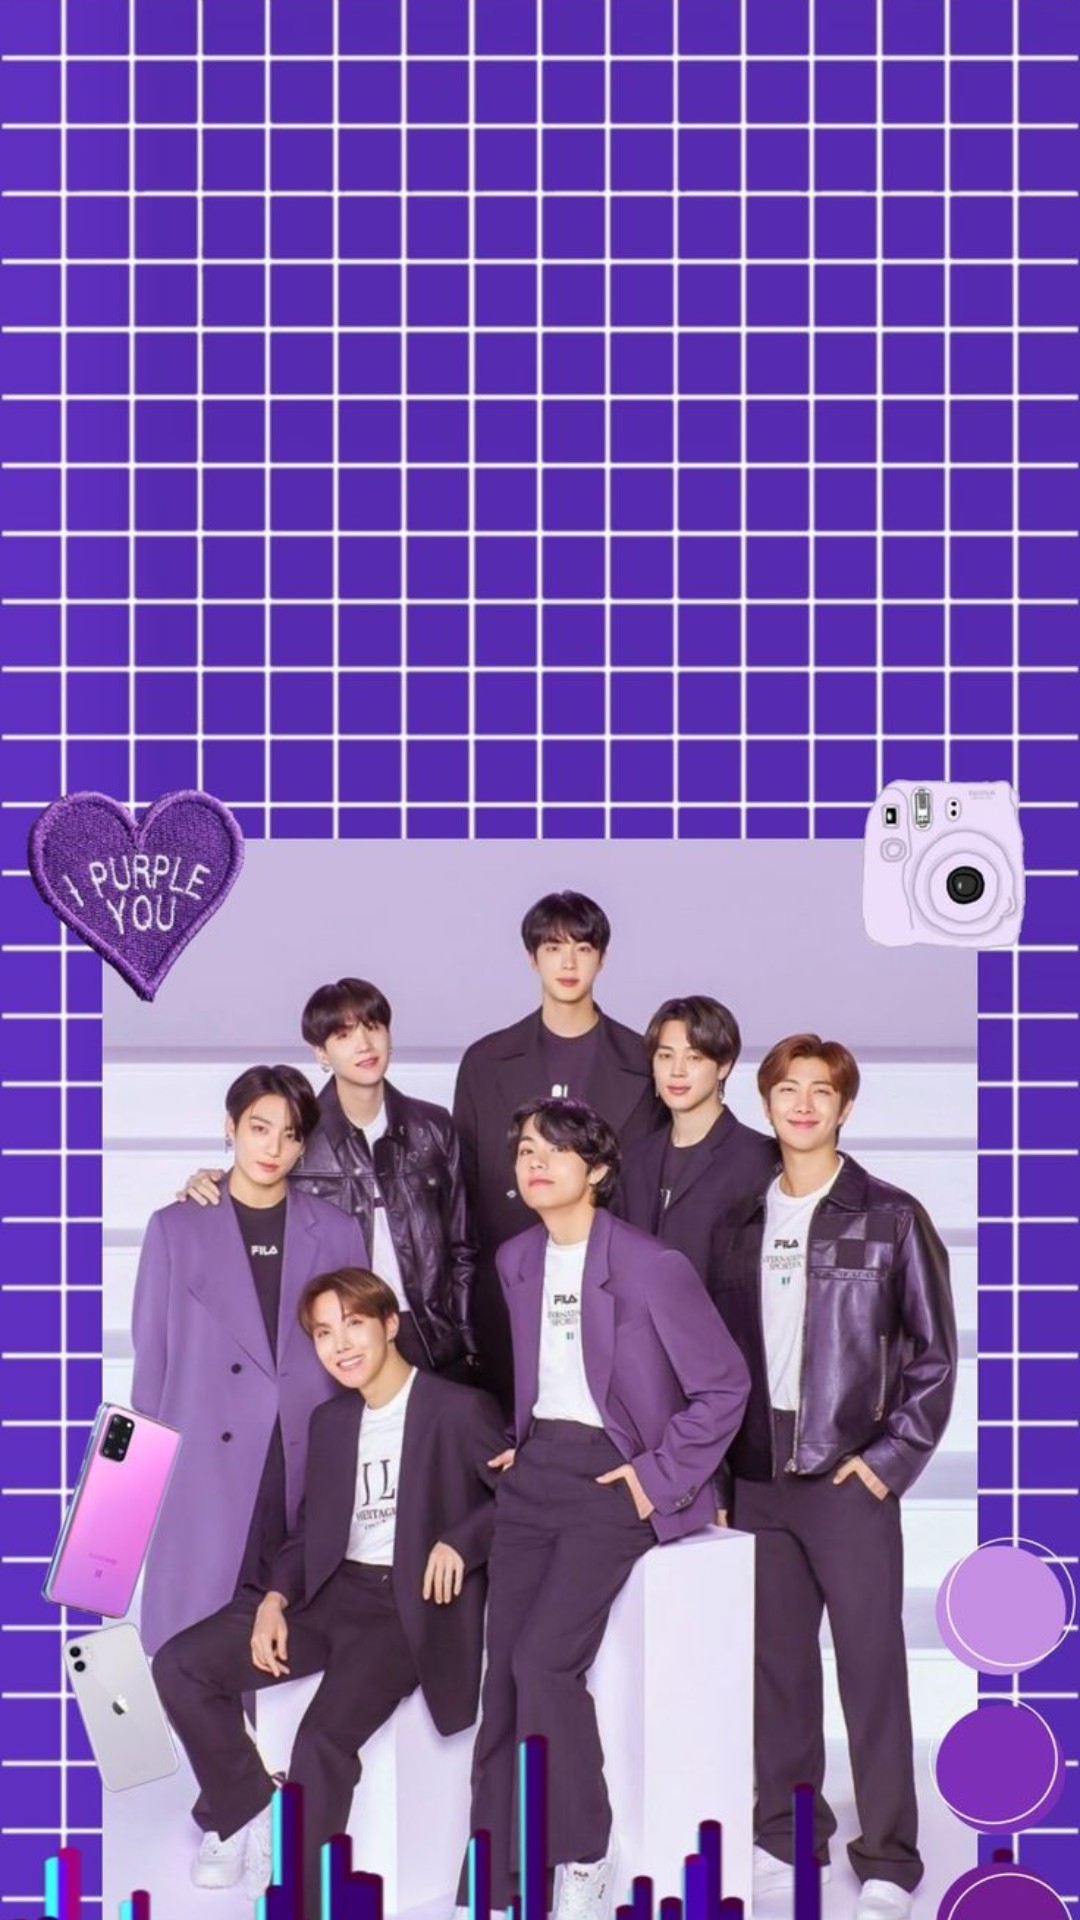 Bts wallpaper  Iphone wallpaper bts, Purple wallpaper, Purple wallpaper  iphone